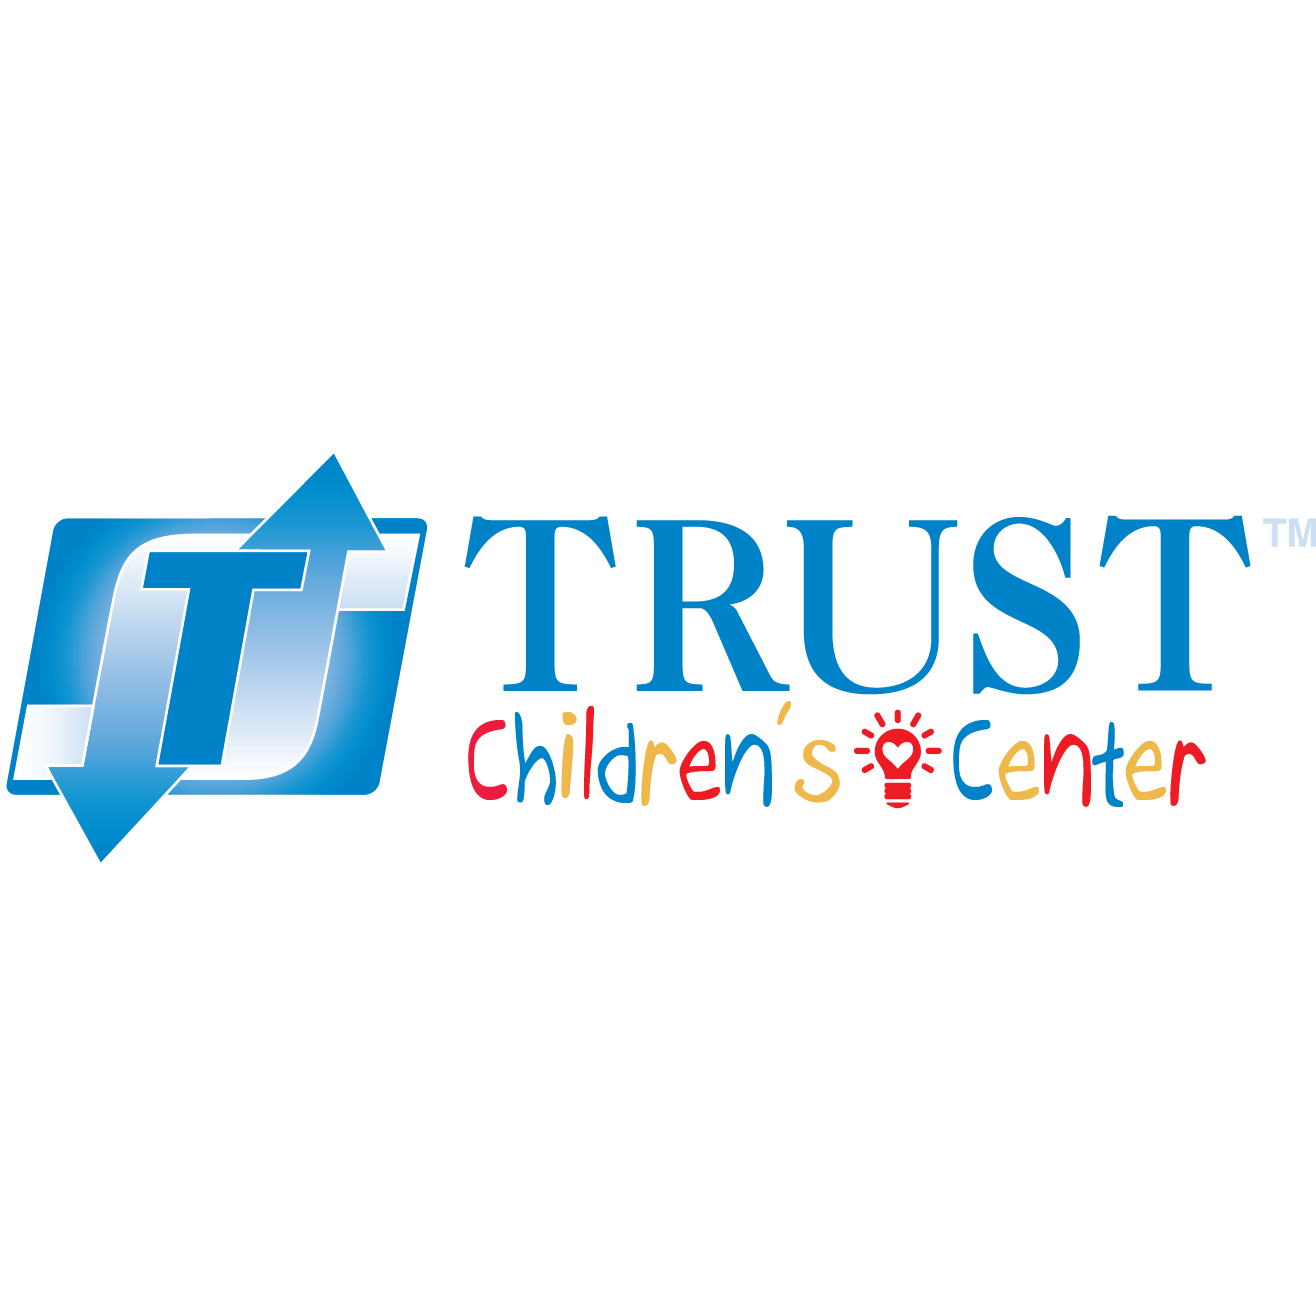 Trust Children's Center